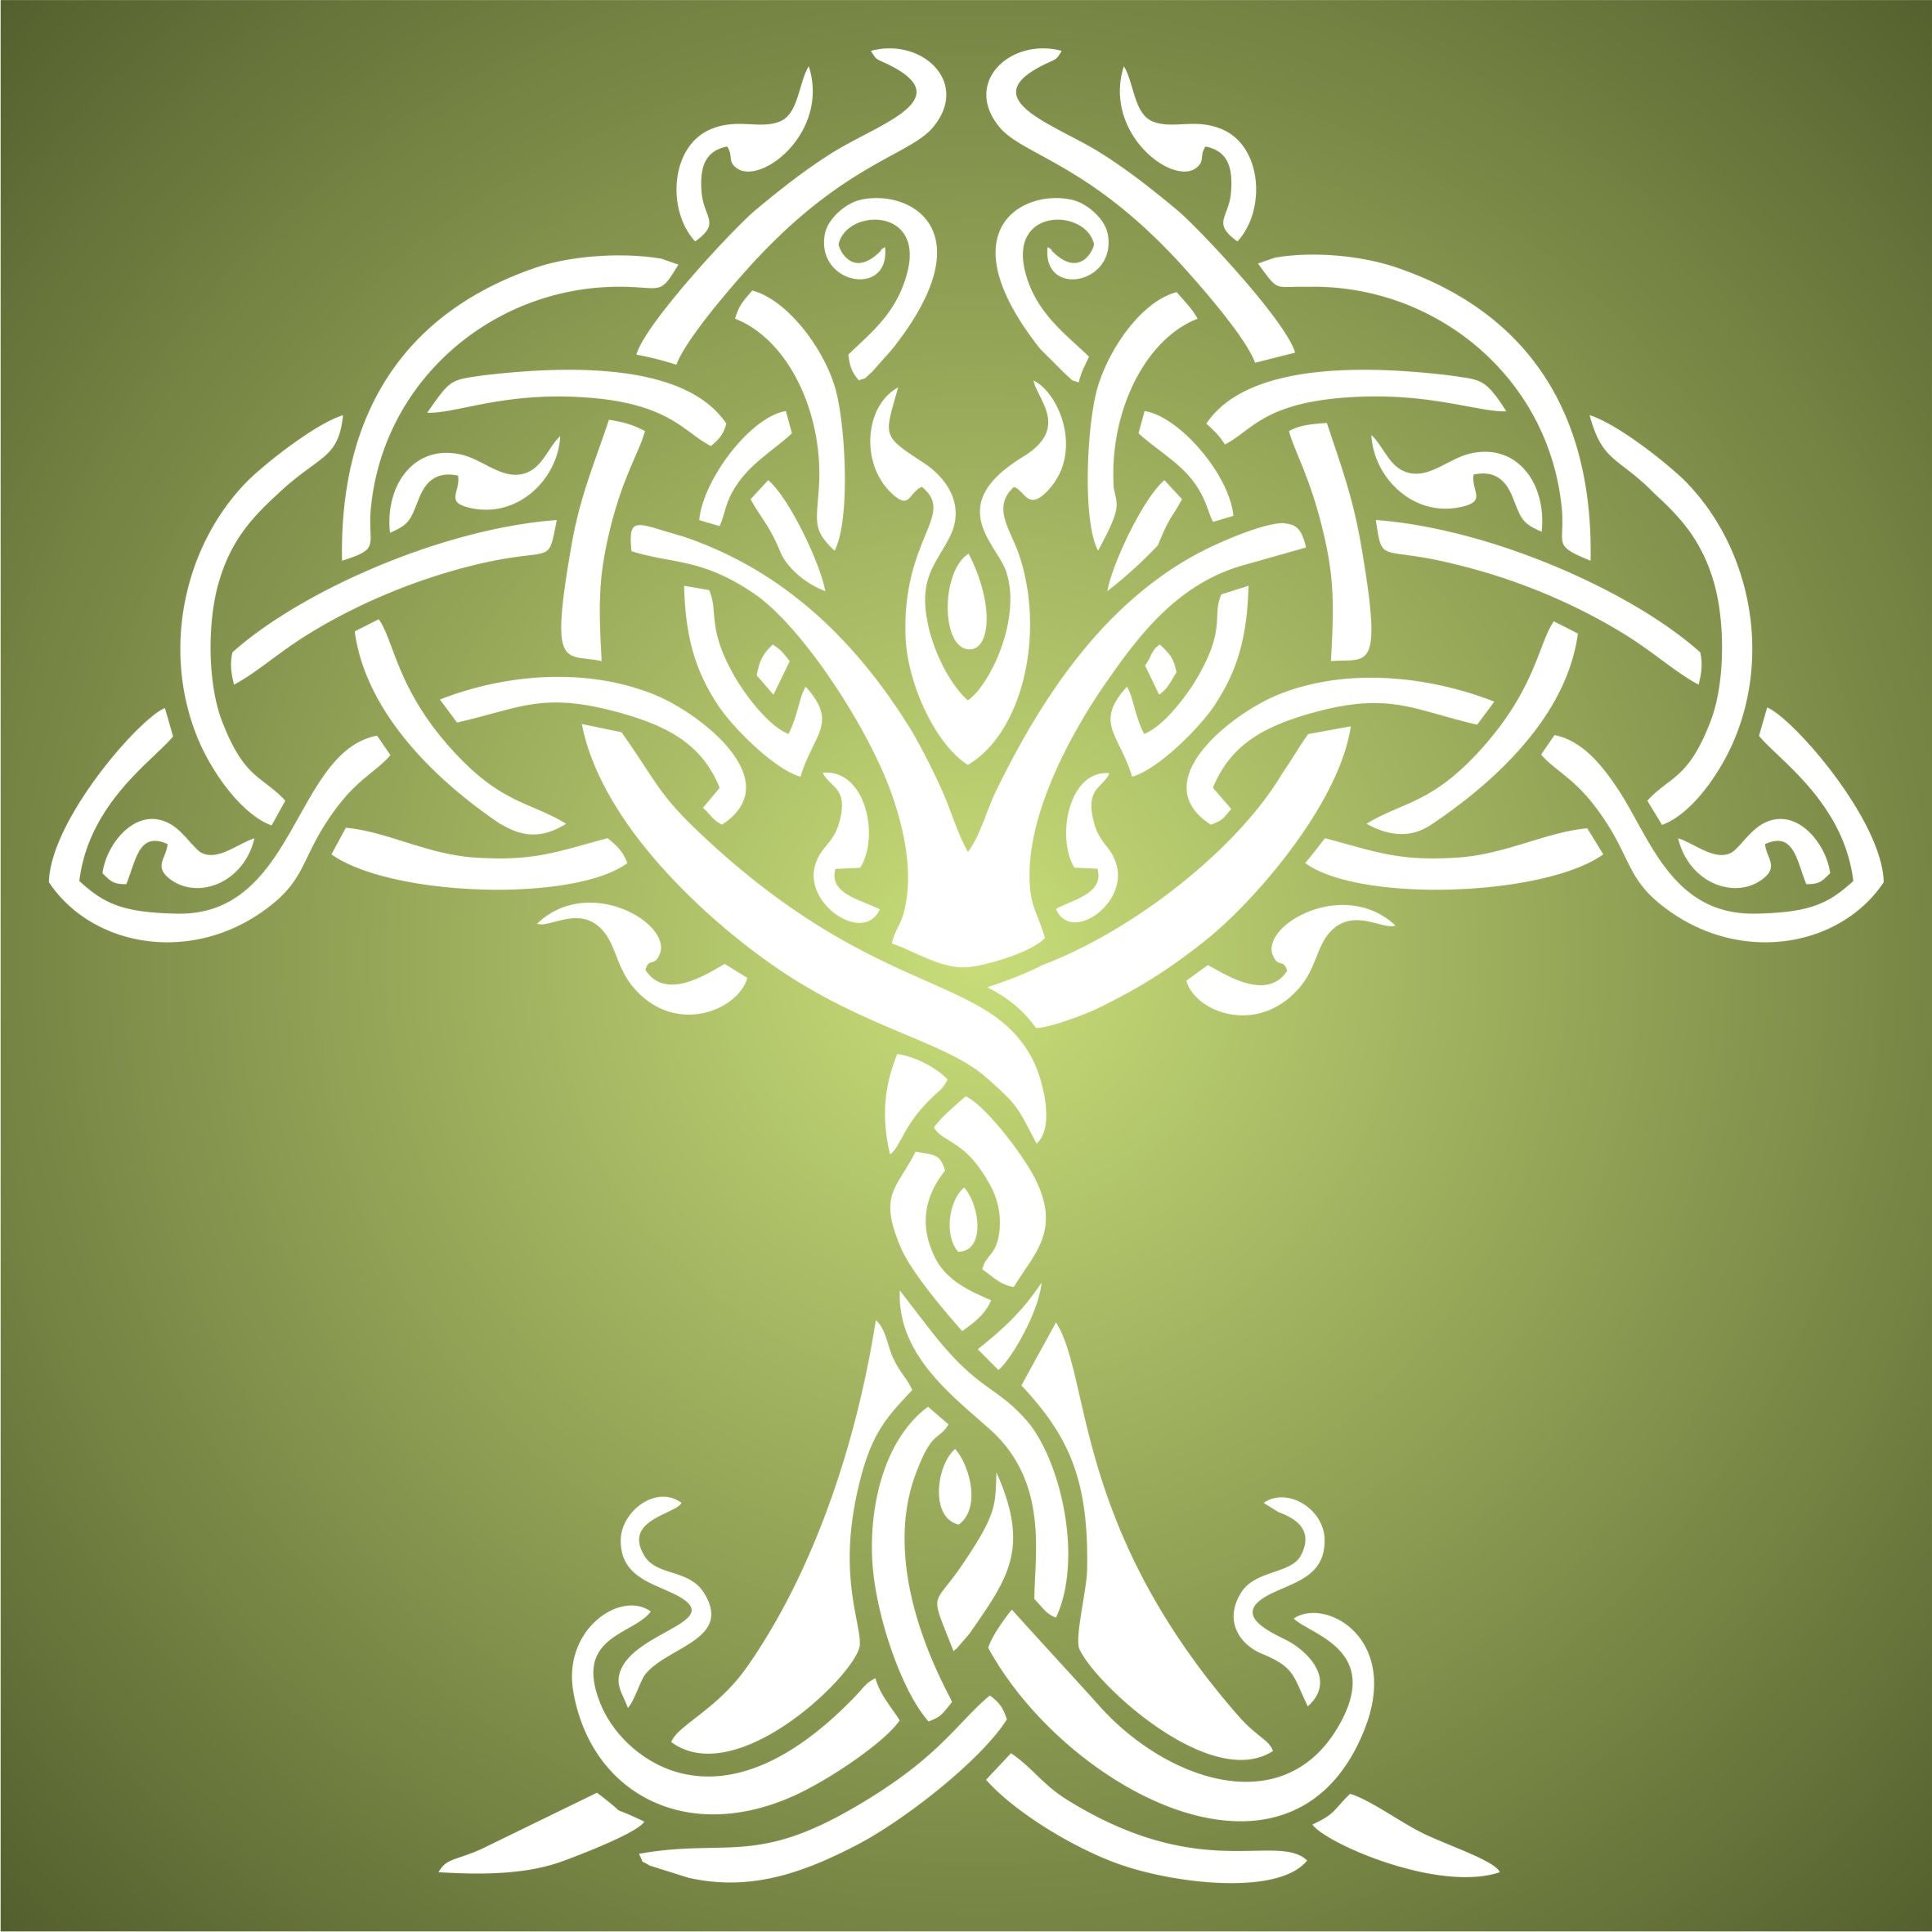 Celtic Tree of Life Stencil - Traditional Irish Knotwork Tree Design